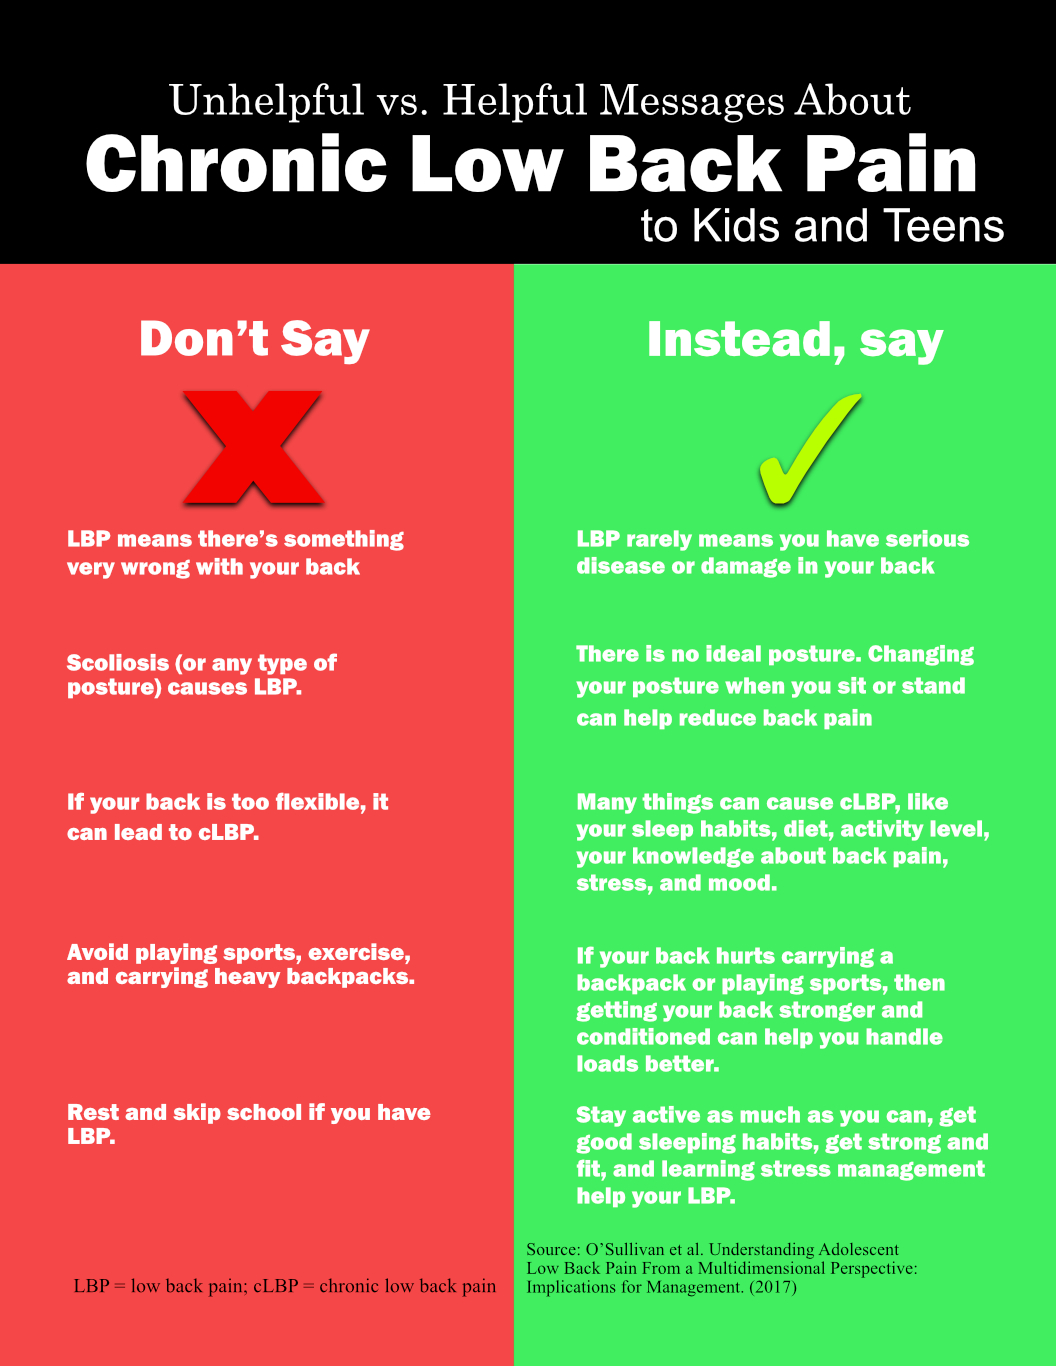 chronic low back pain, posture, backpacks, sleep, back pain